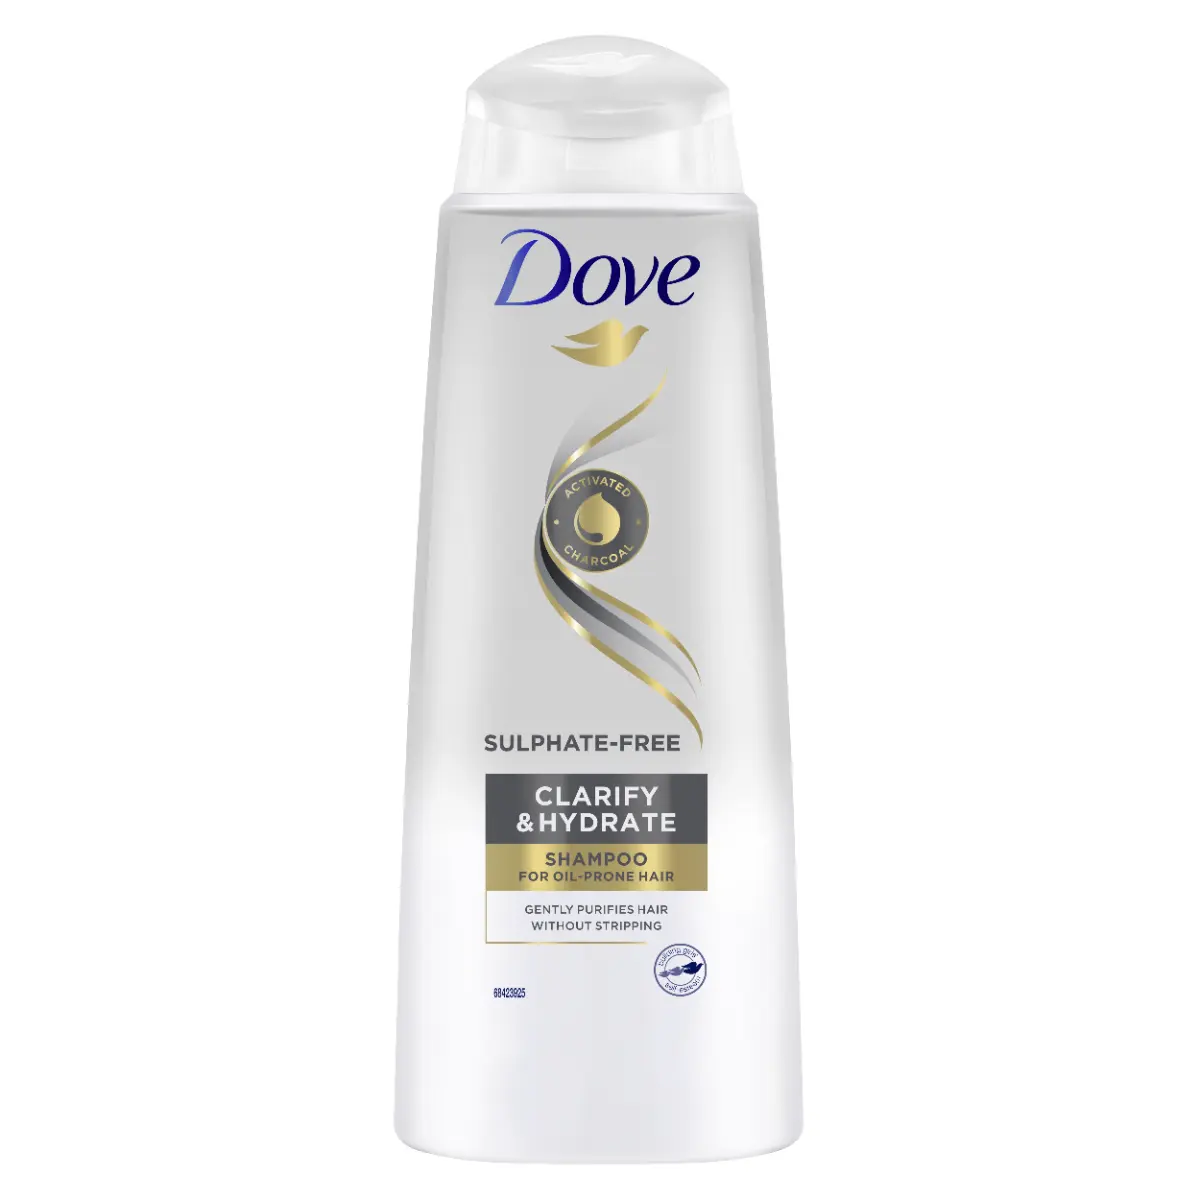 Sampon Dove Clarify & Hydrate, 400 ml